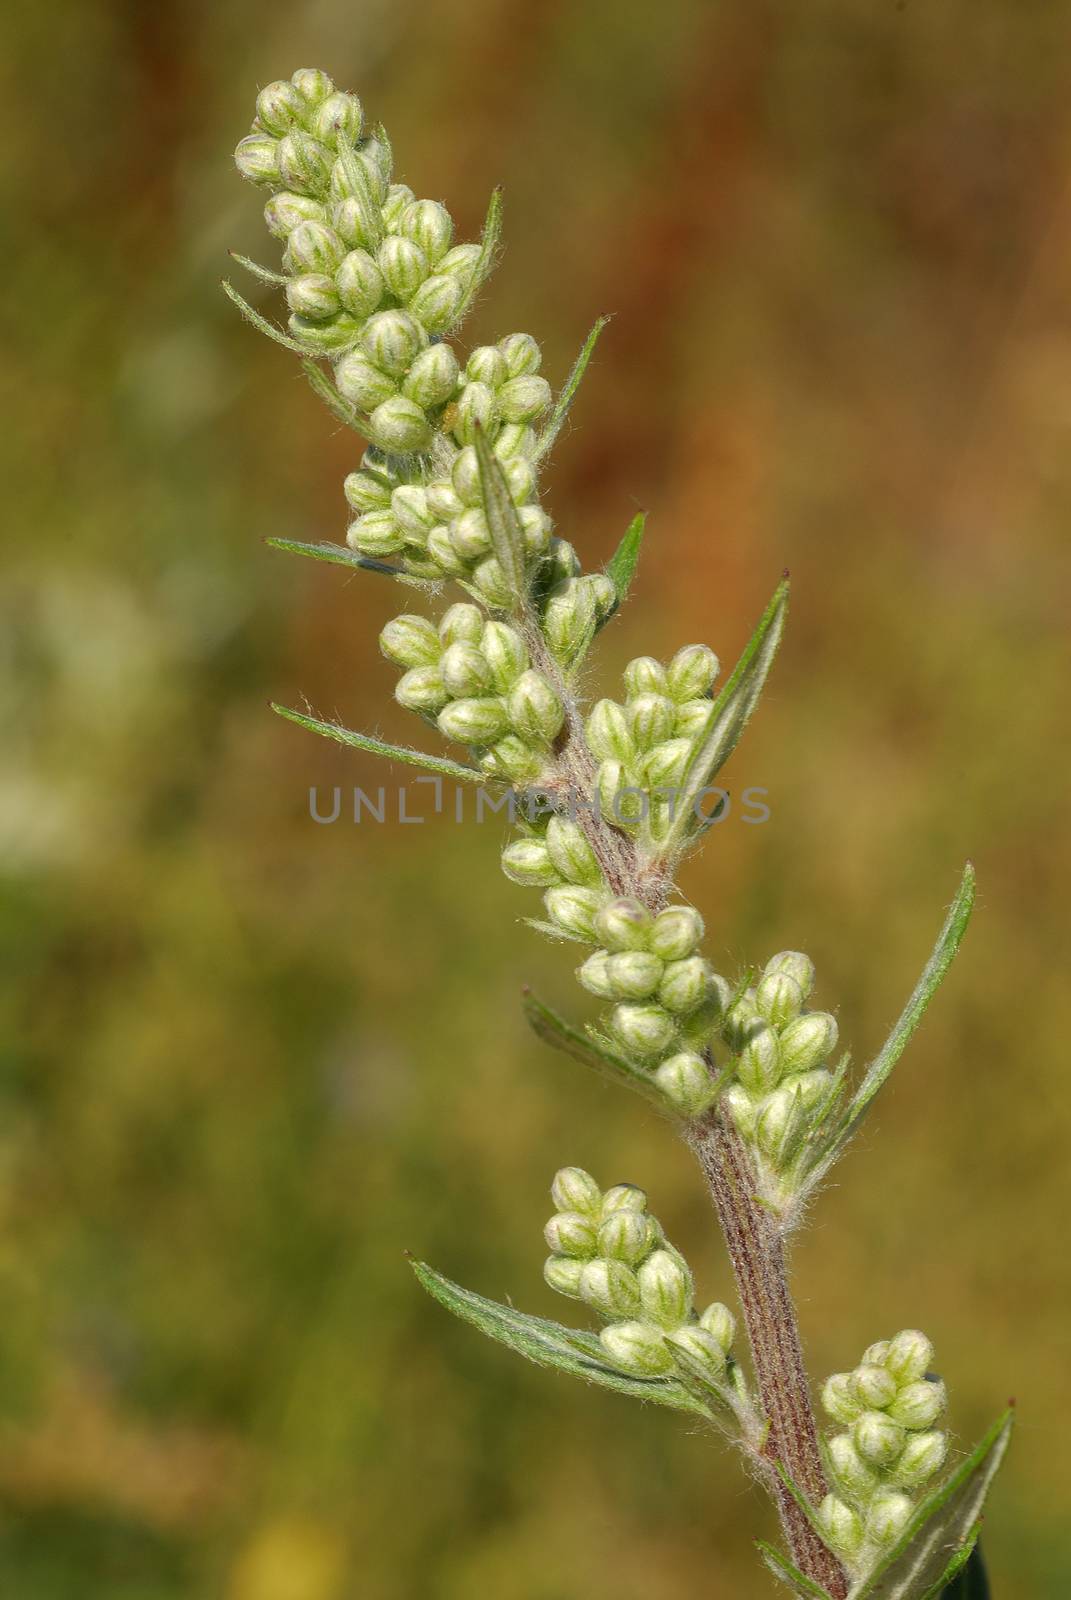 Artemisa vulgaris, Allergens Plants by jalonsohu@gmail.com